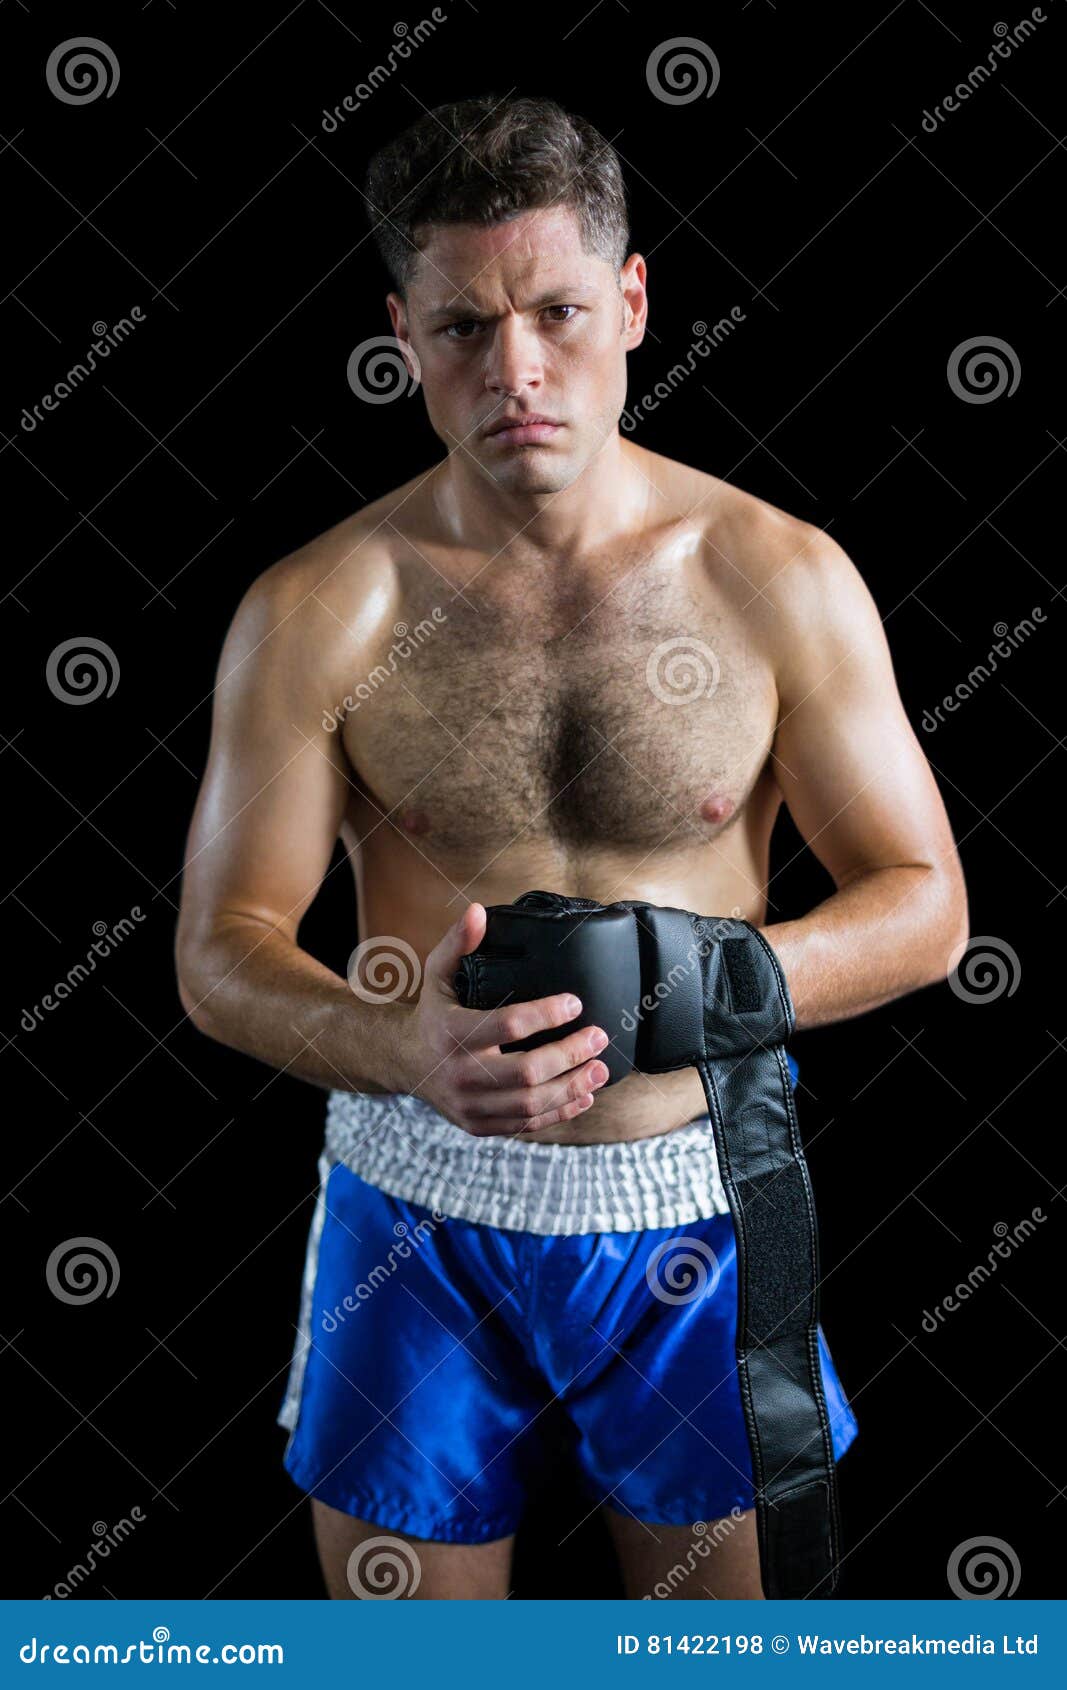 boxer wearing grappling gloves